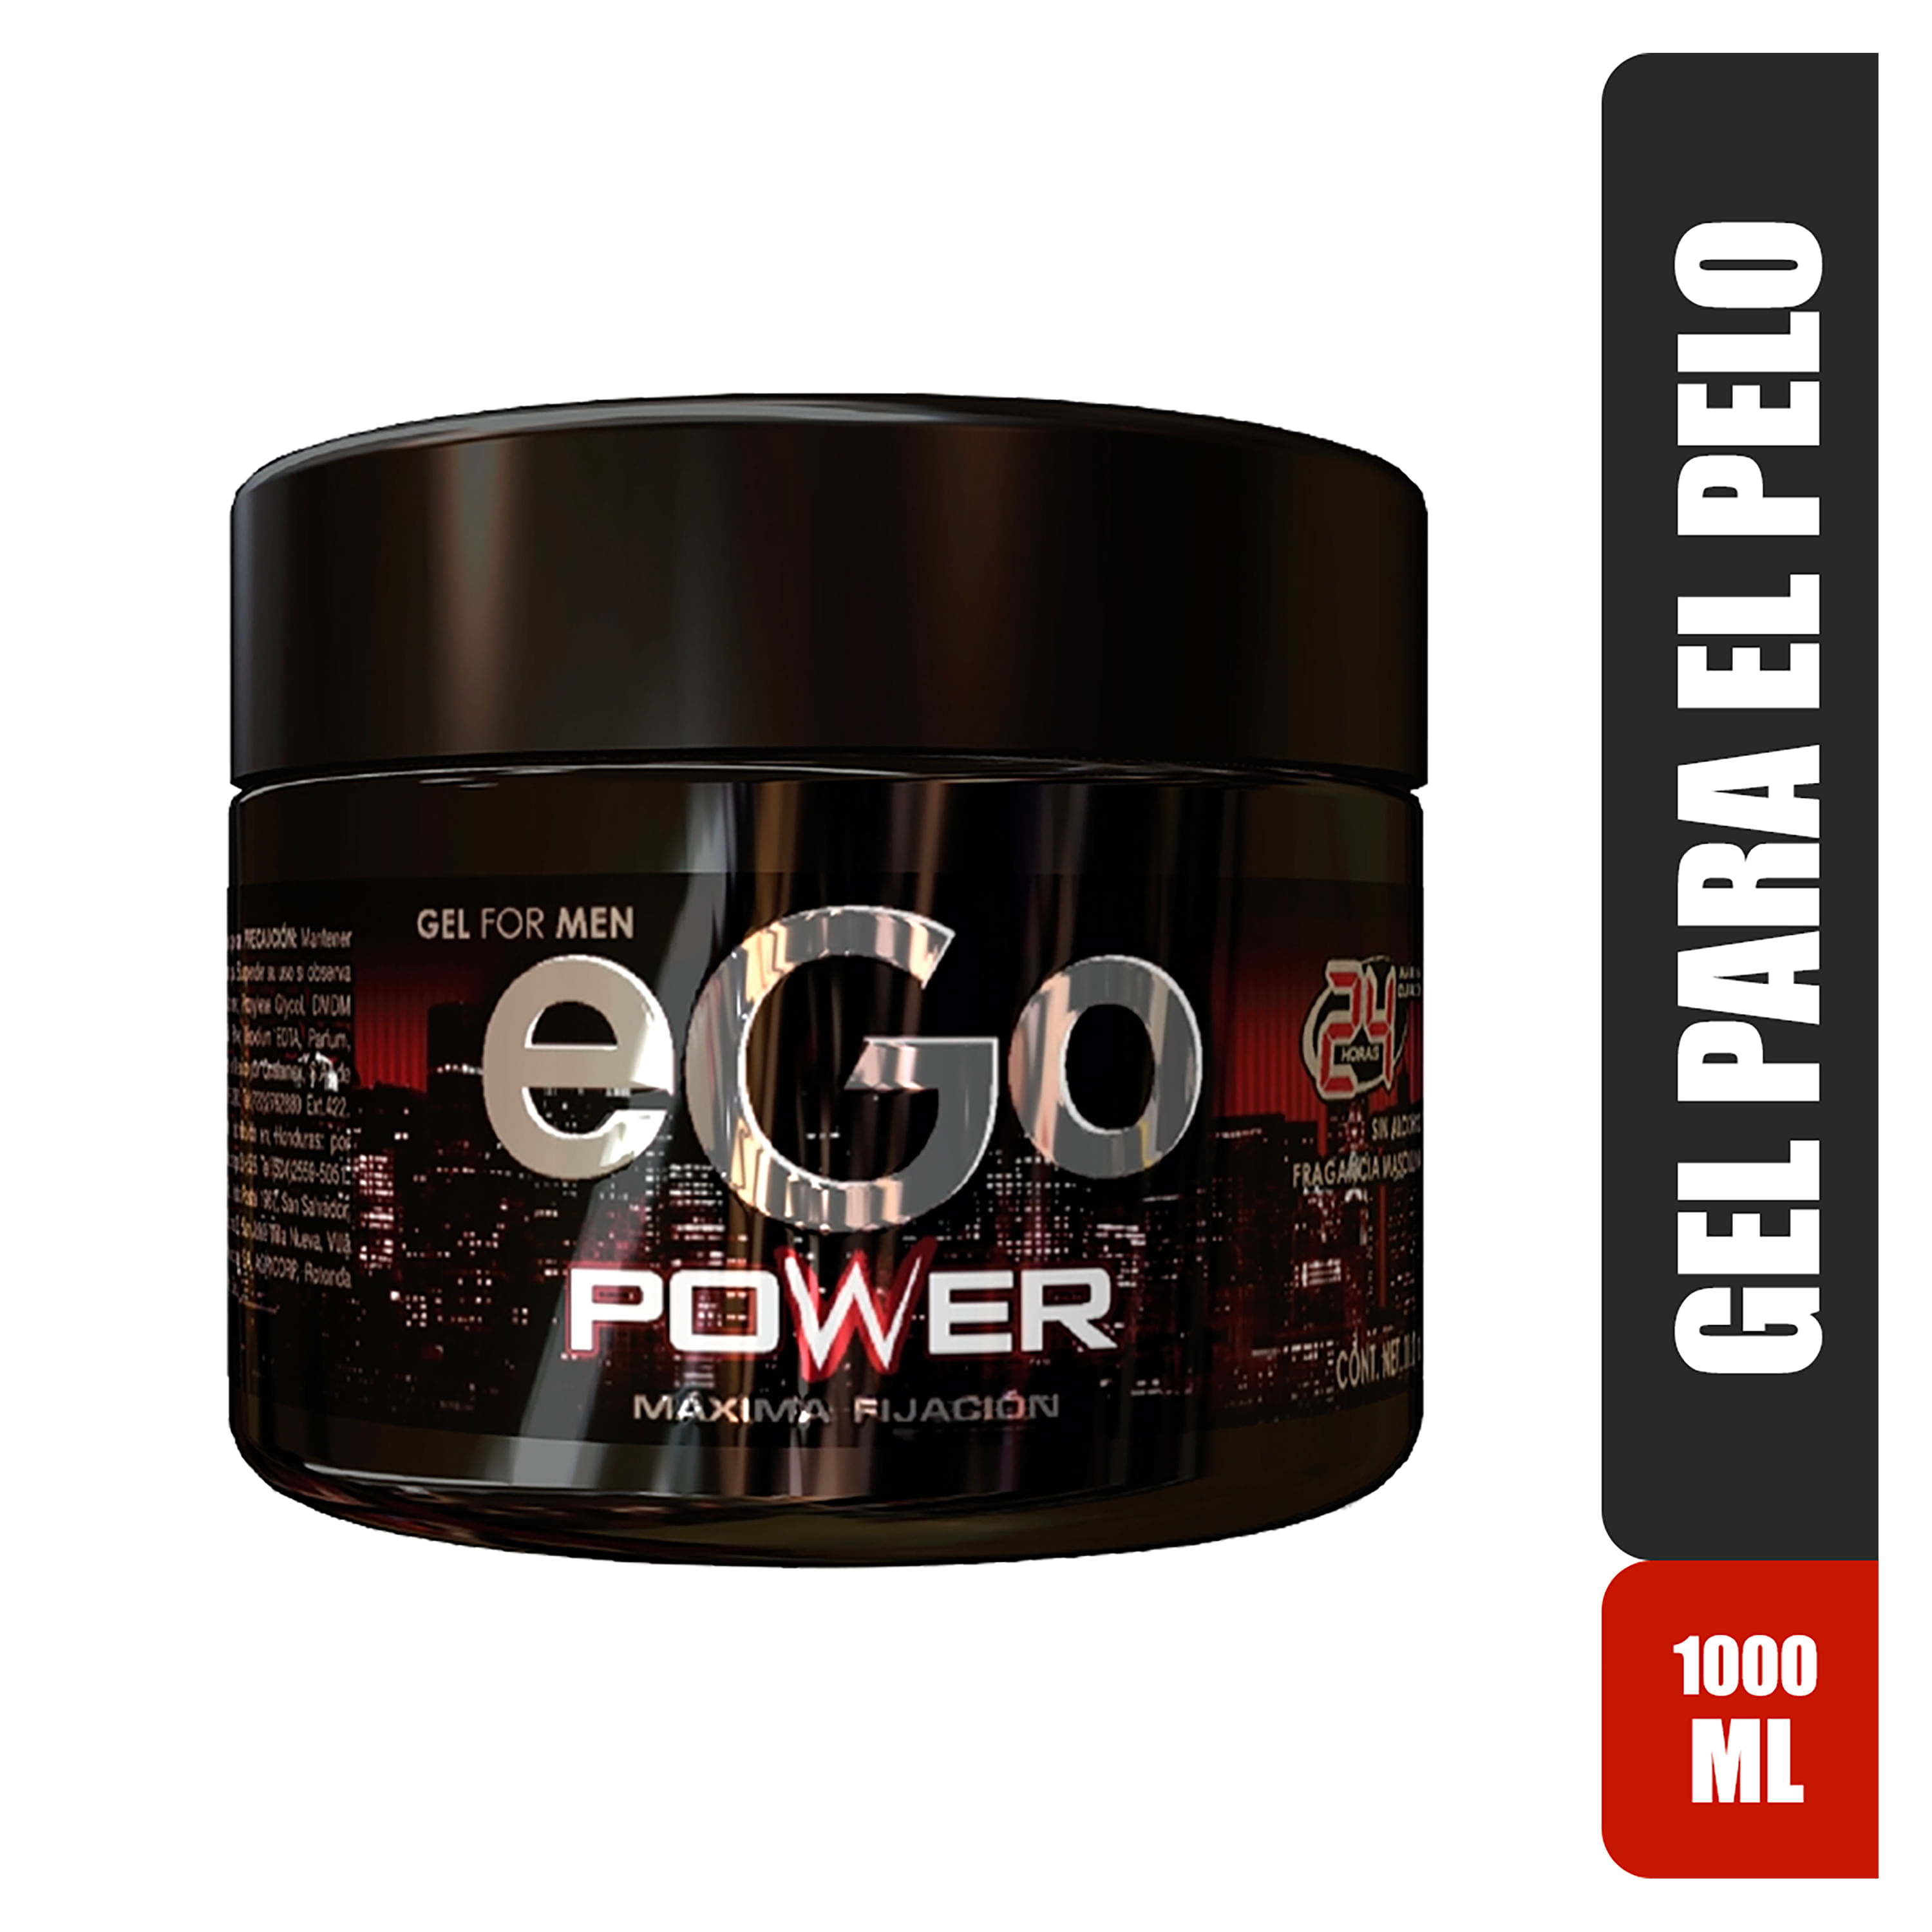 Perth agudo Untado Comprar Gel Ego For Men Power -1000ml | Walmart Costa Rica